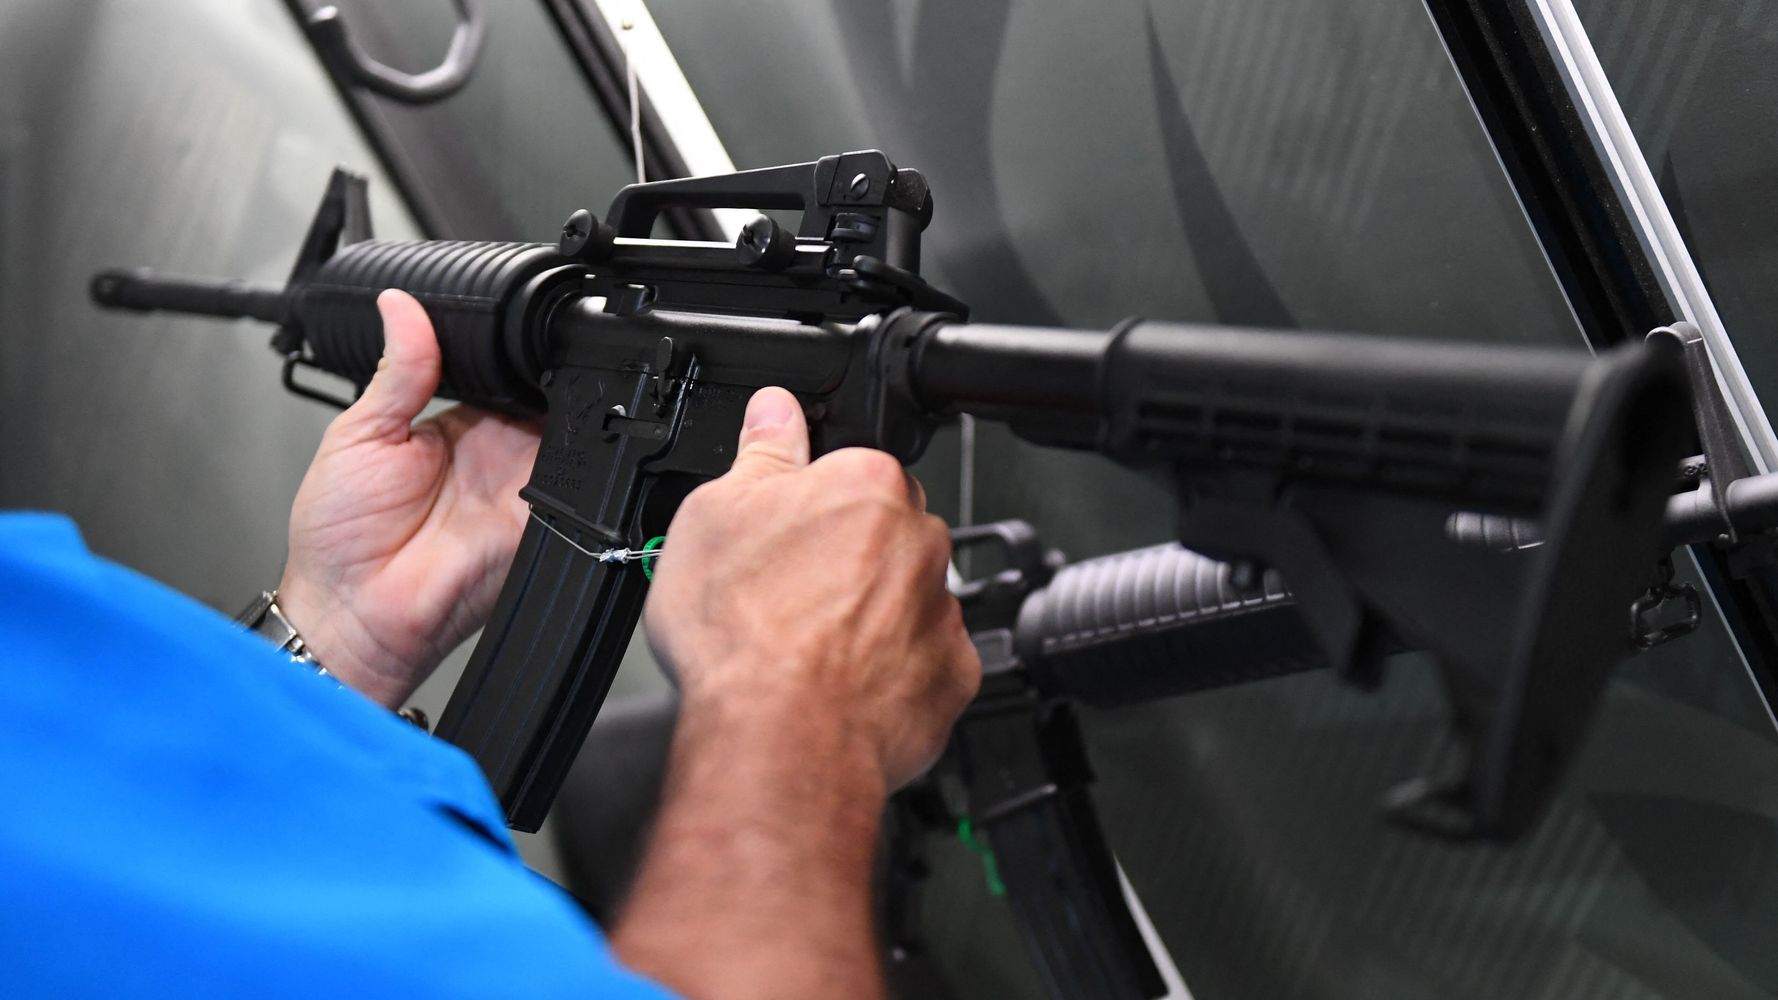 North Carolina County Hopes AR-15s Will Stop Inside School Shootings